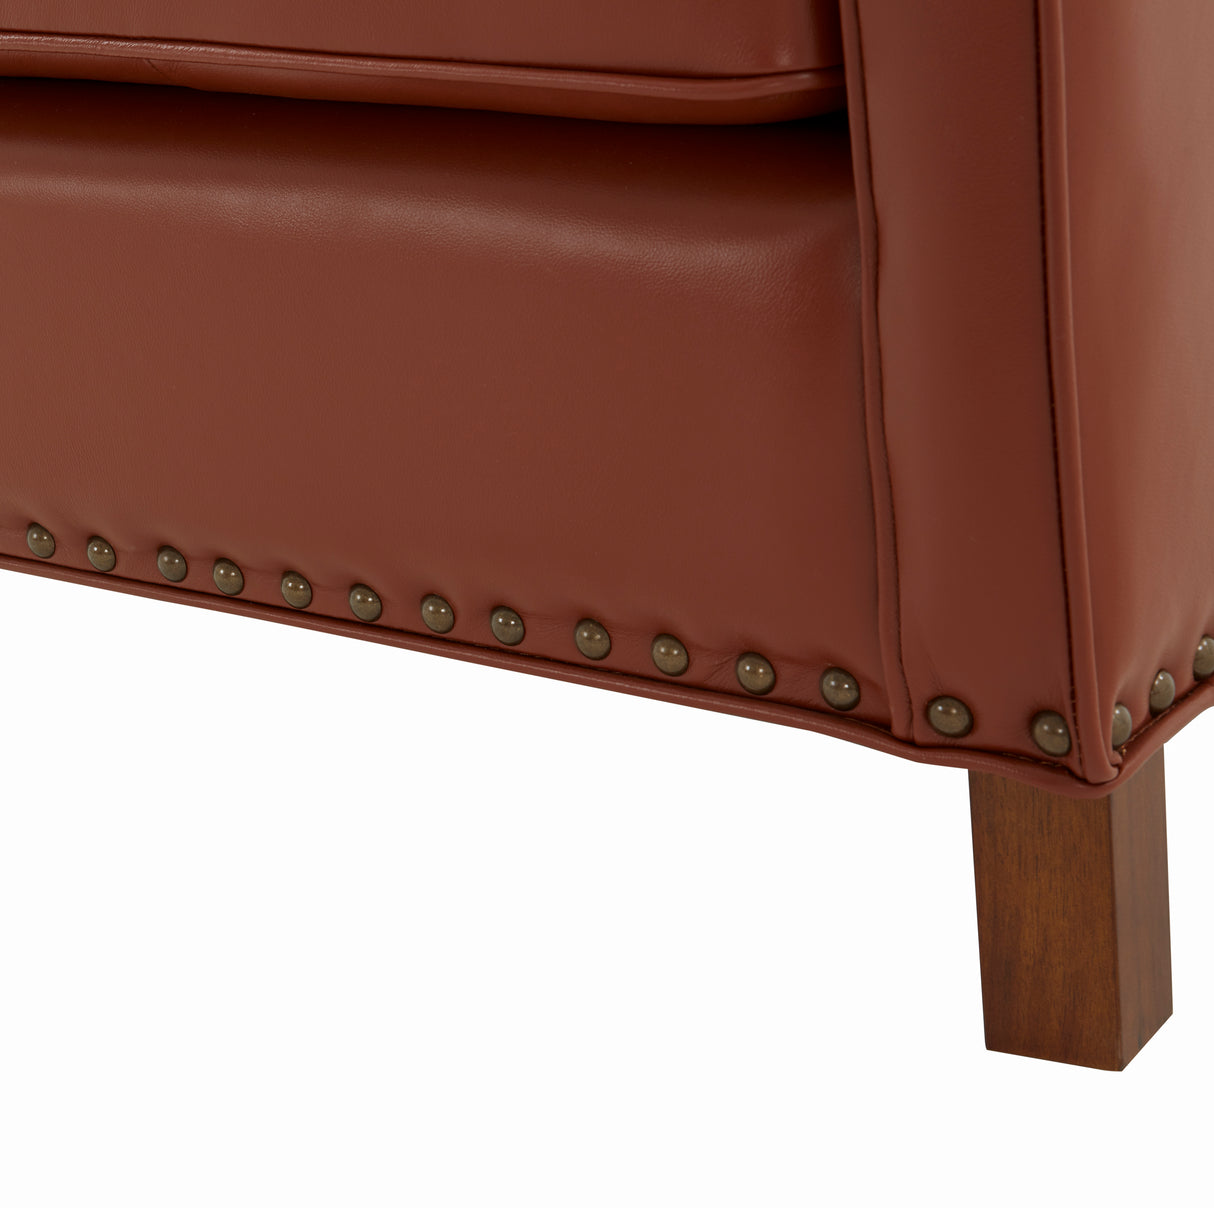 Elizabeth Top Grain Leather Arm Chair - Home Elegance USA